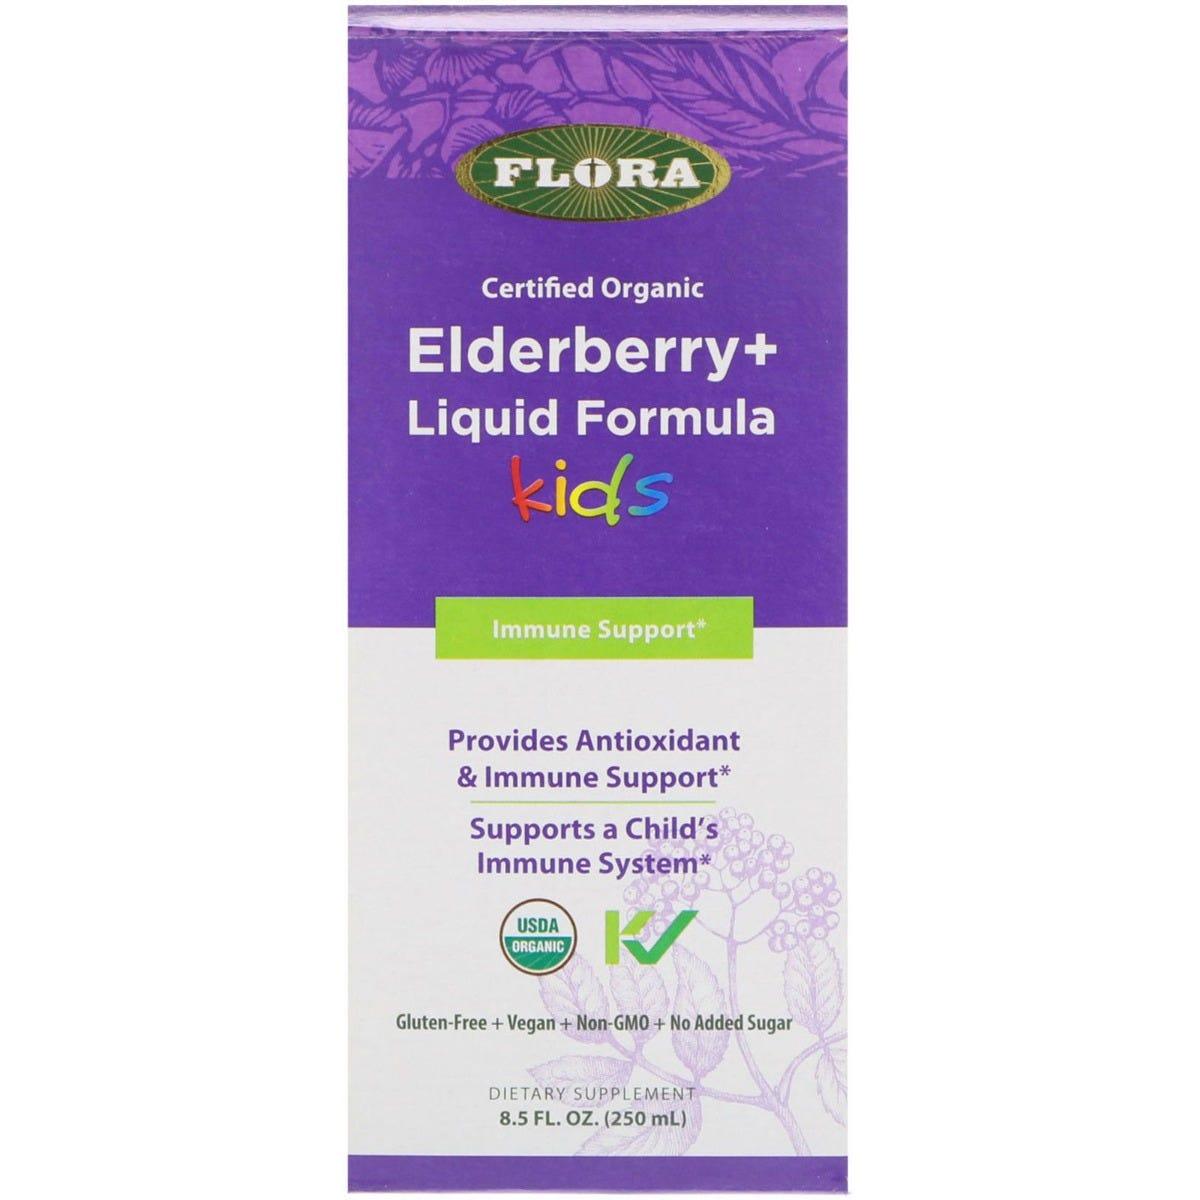 Flora Elderberry+ Liquid Formula Kids 250ml